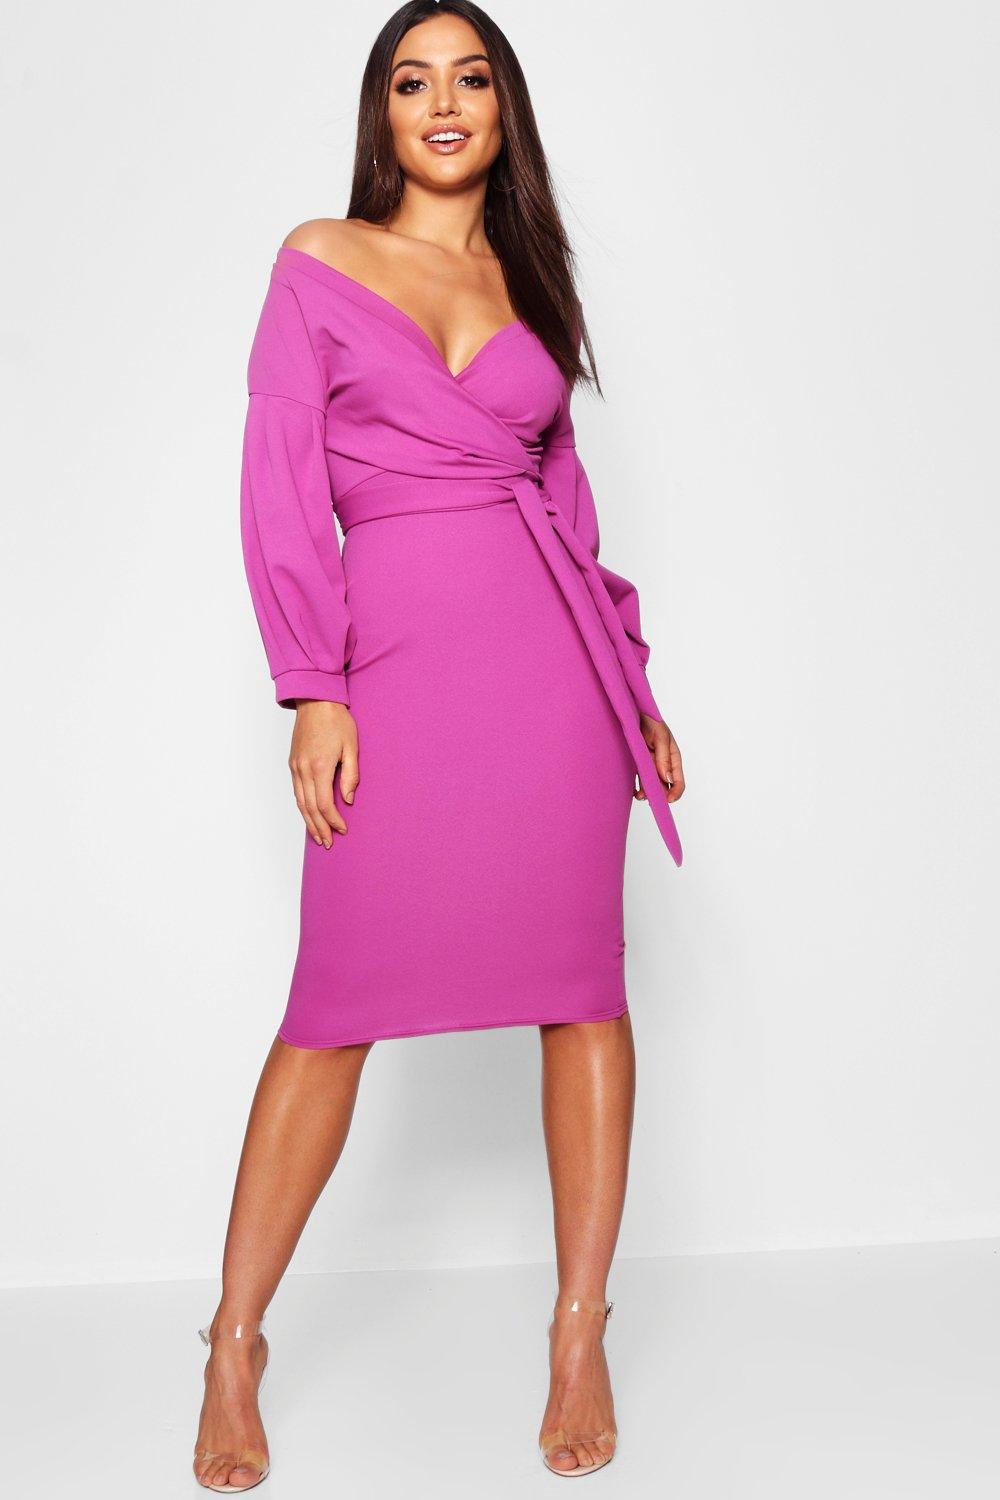 Lyst - Boohoo Off The Shoulder Wrap Midi Dress in Purple